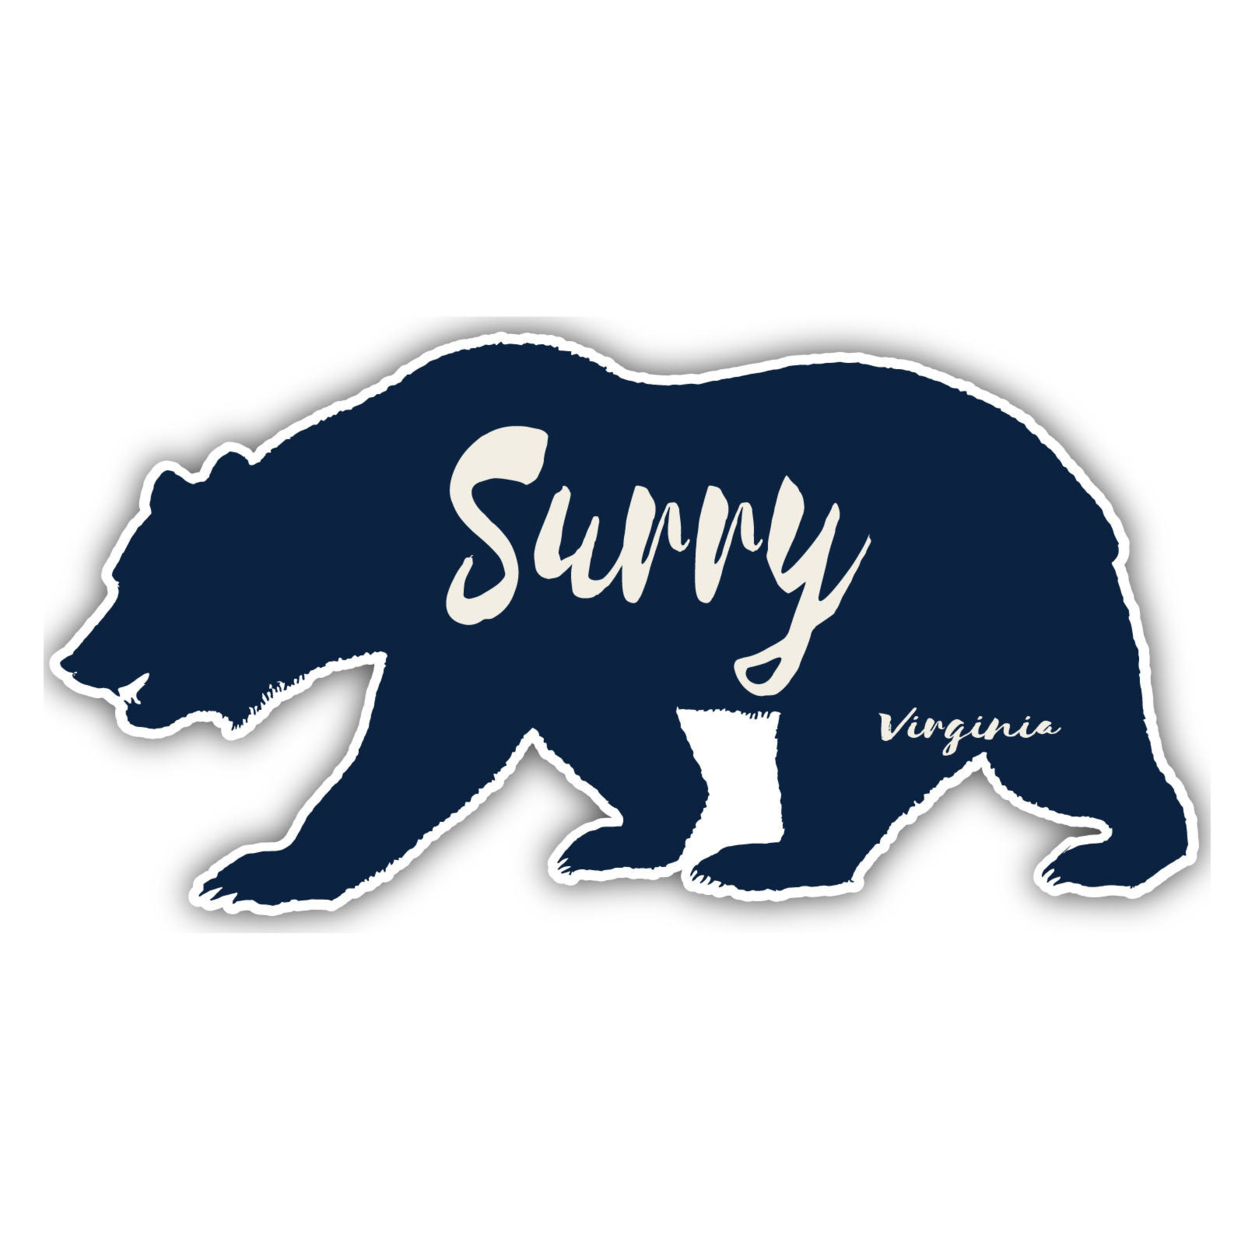 Surry Virginia Souvenir Decorative Stickers (Choose Theme And Size) - Single Unit, 2-Inch, Bear